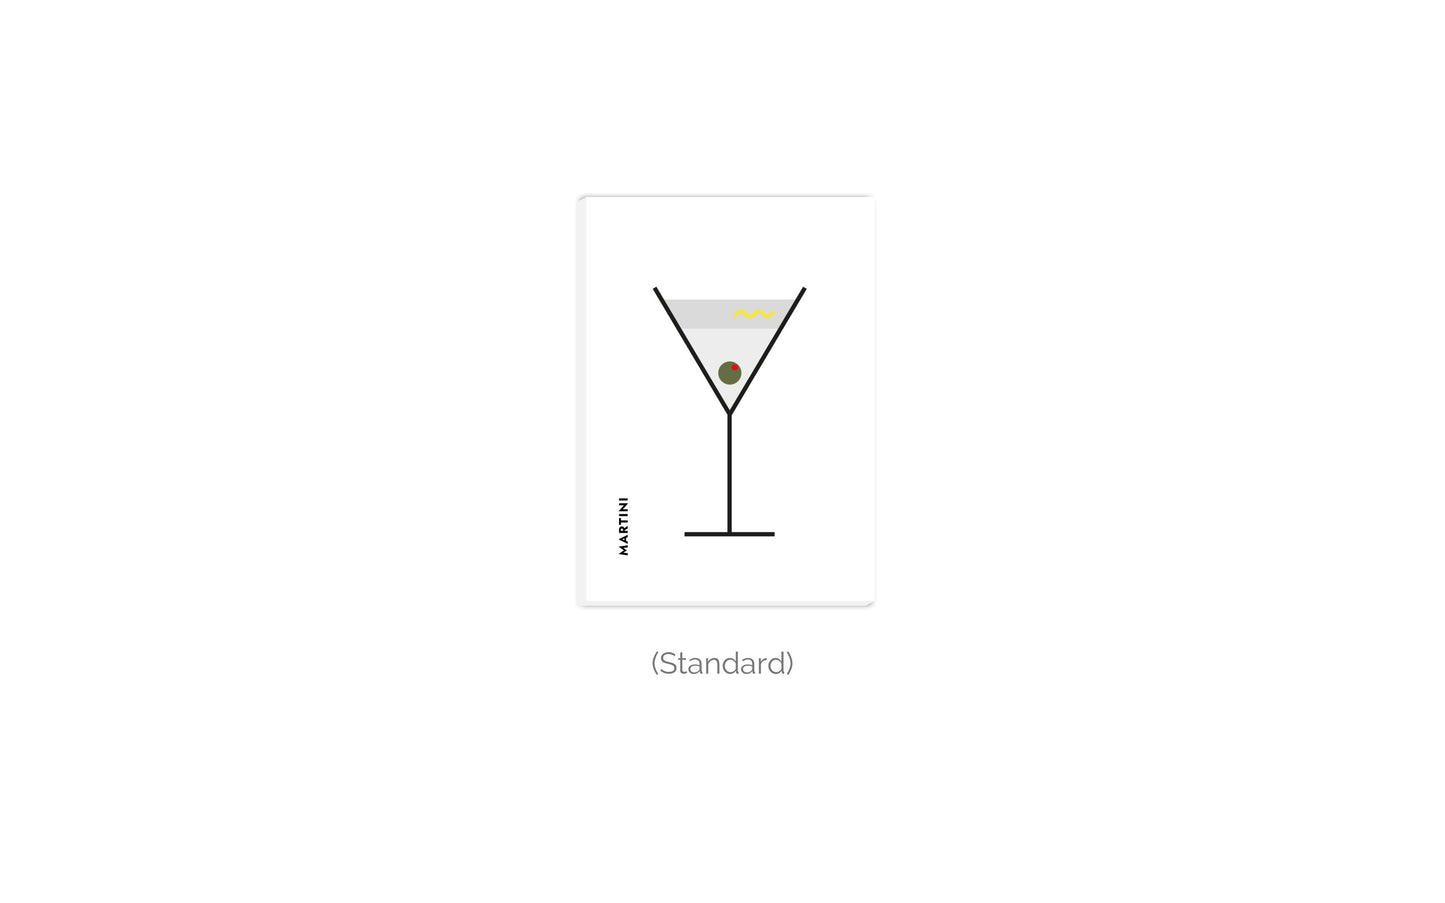 Leinwand Martini im Glas (Bauhaus-Style)